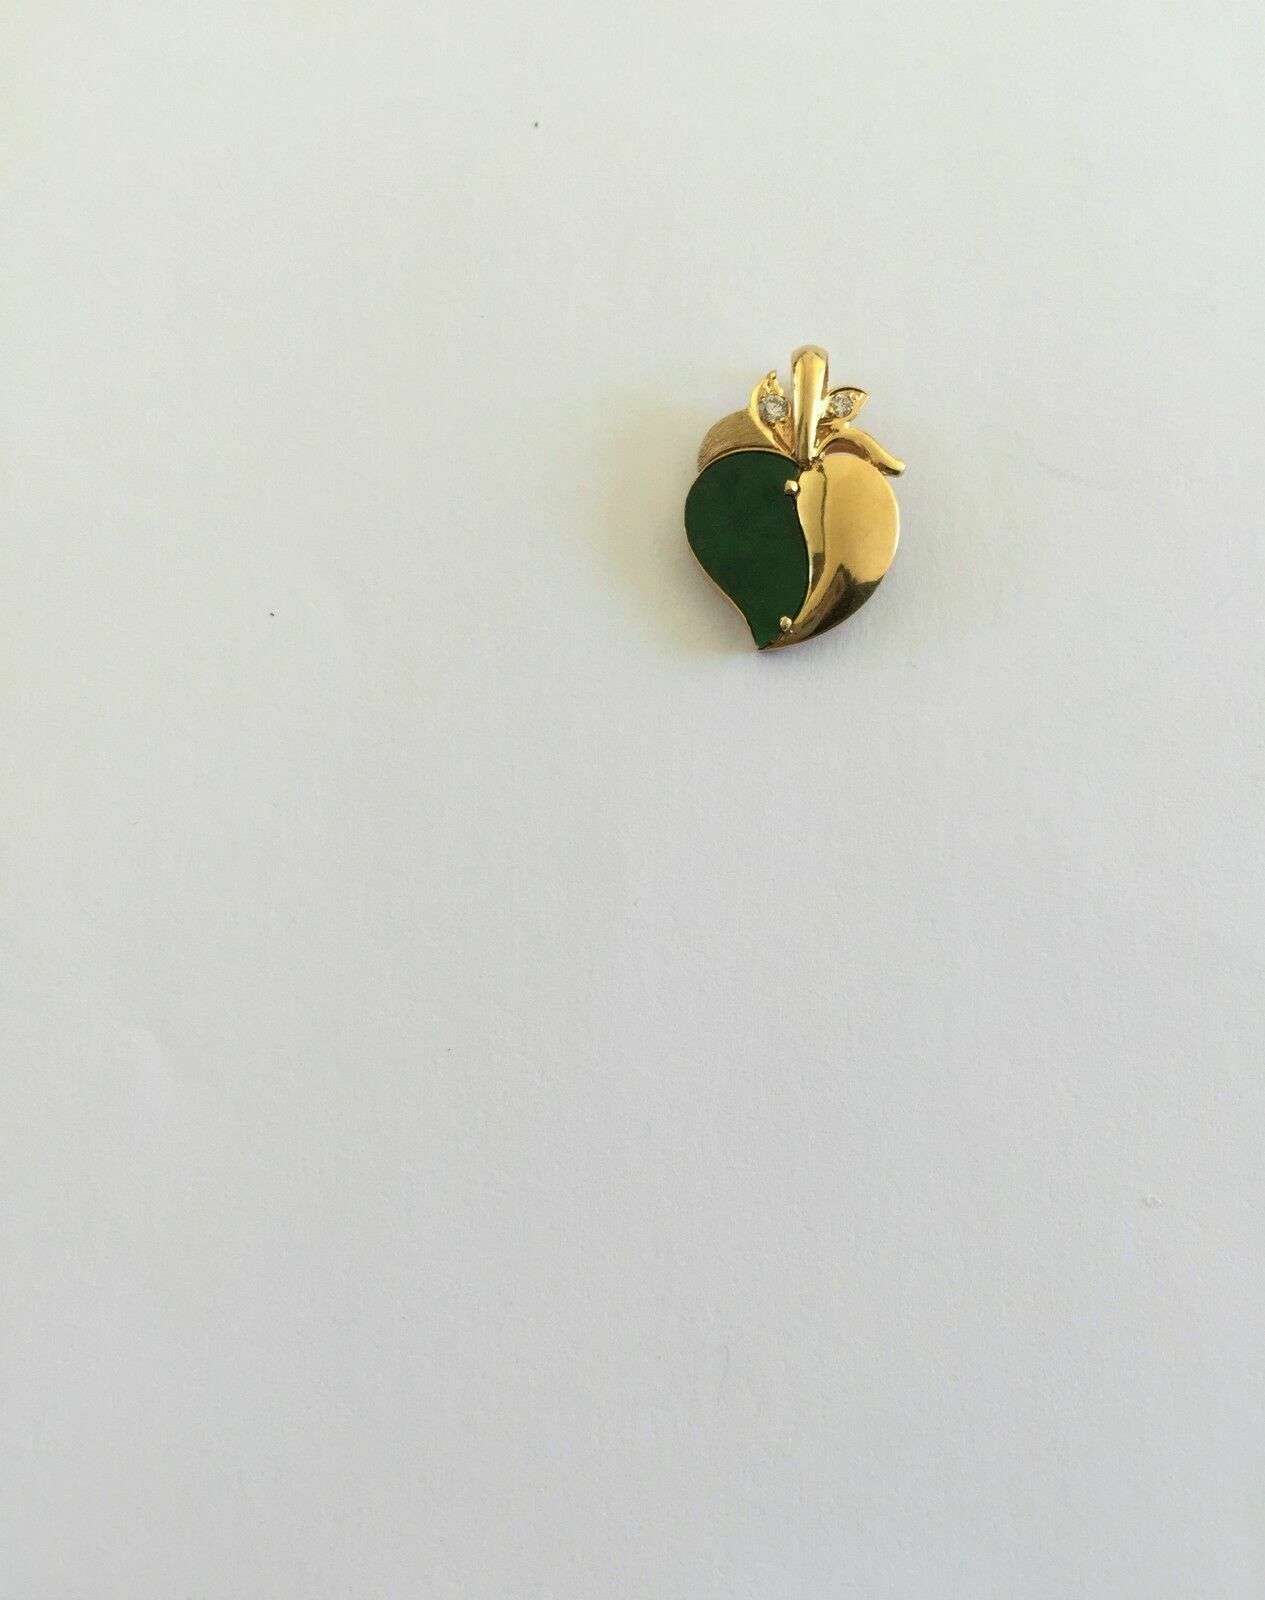 Small 14K Yellow Gold Heart Green Jade Pendant